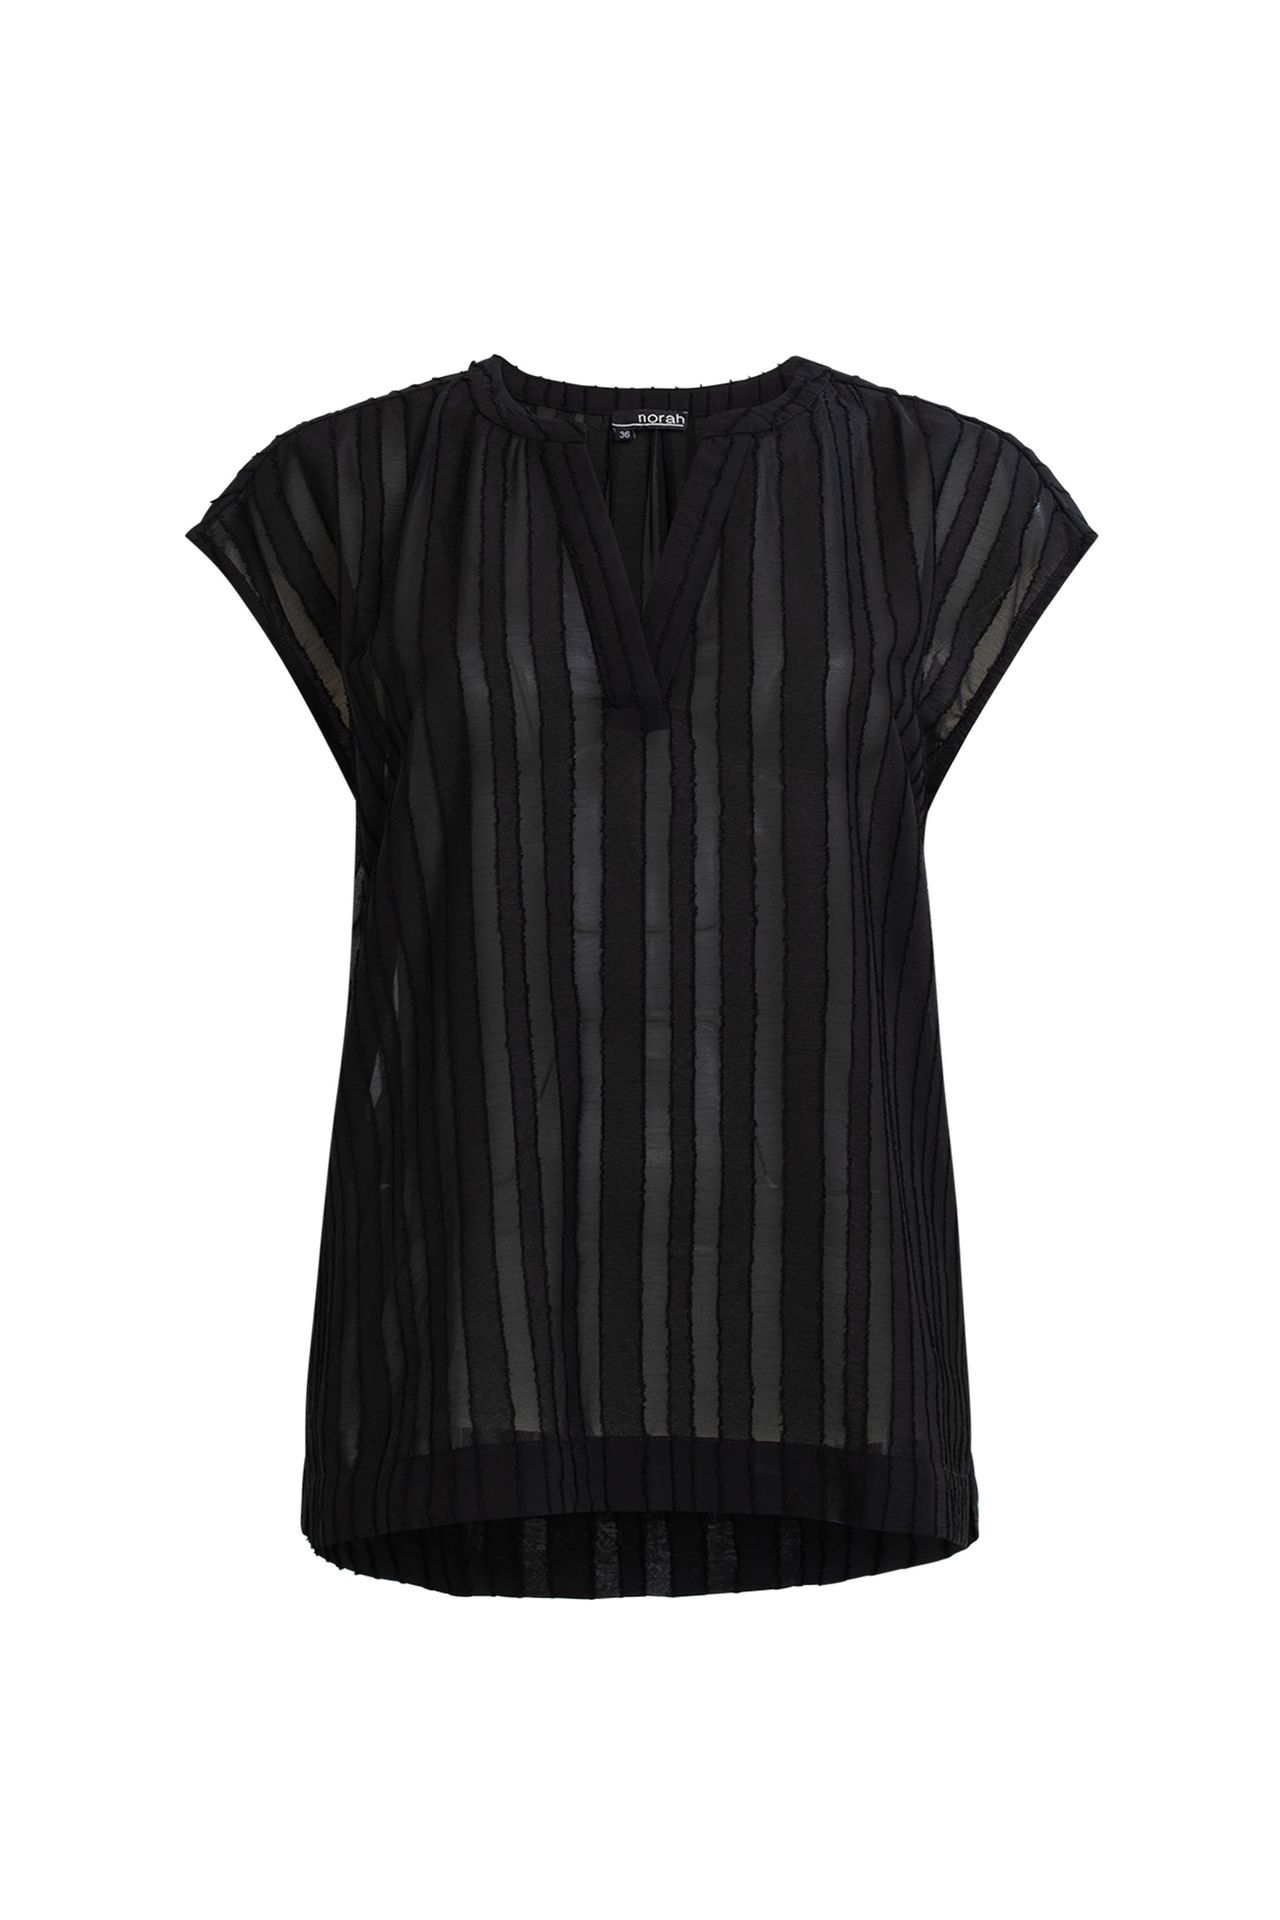 Norah Zwarte blouse black 211032-001